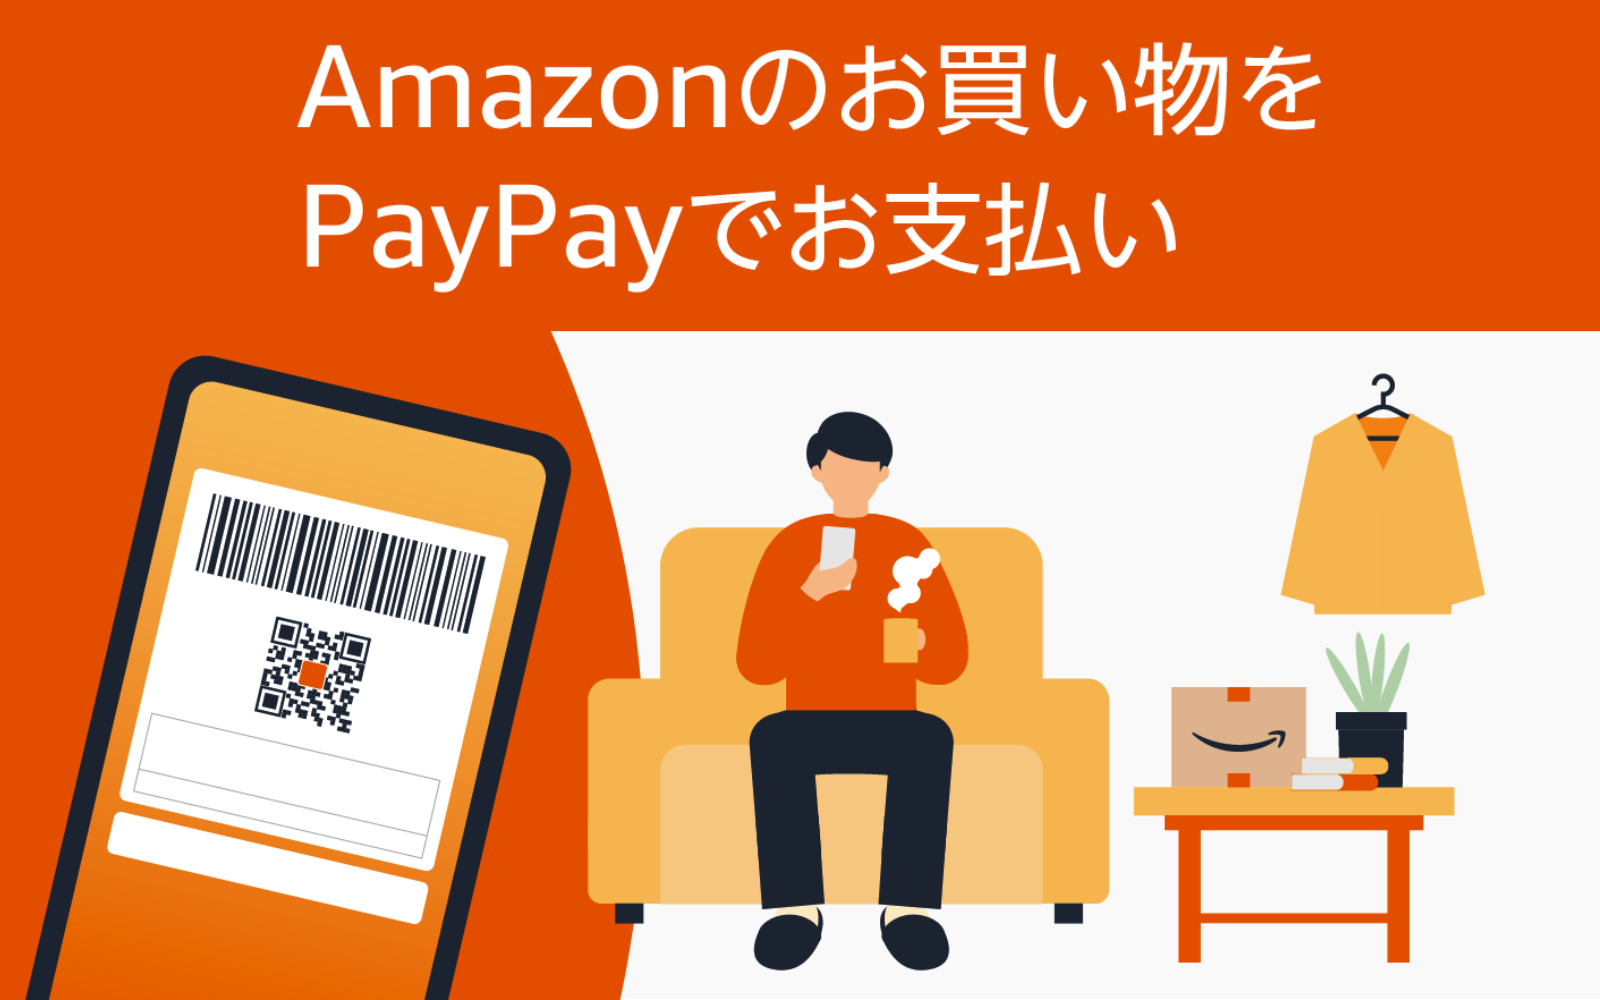 Amazon PayPay